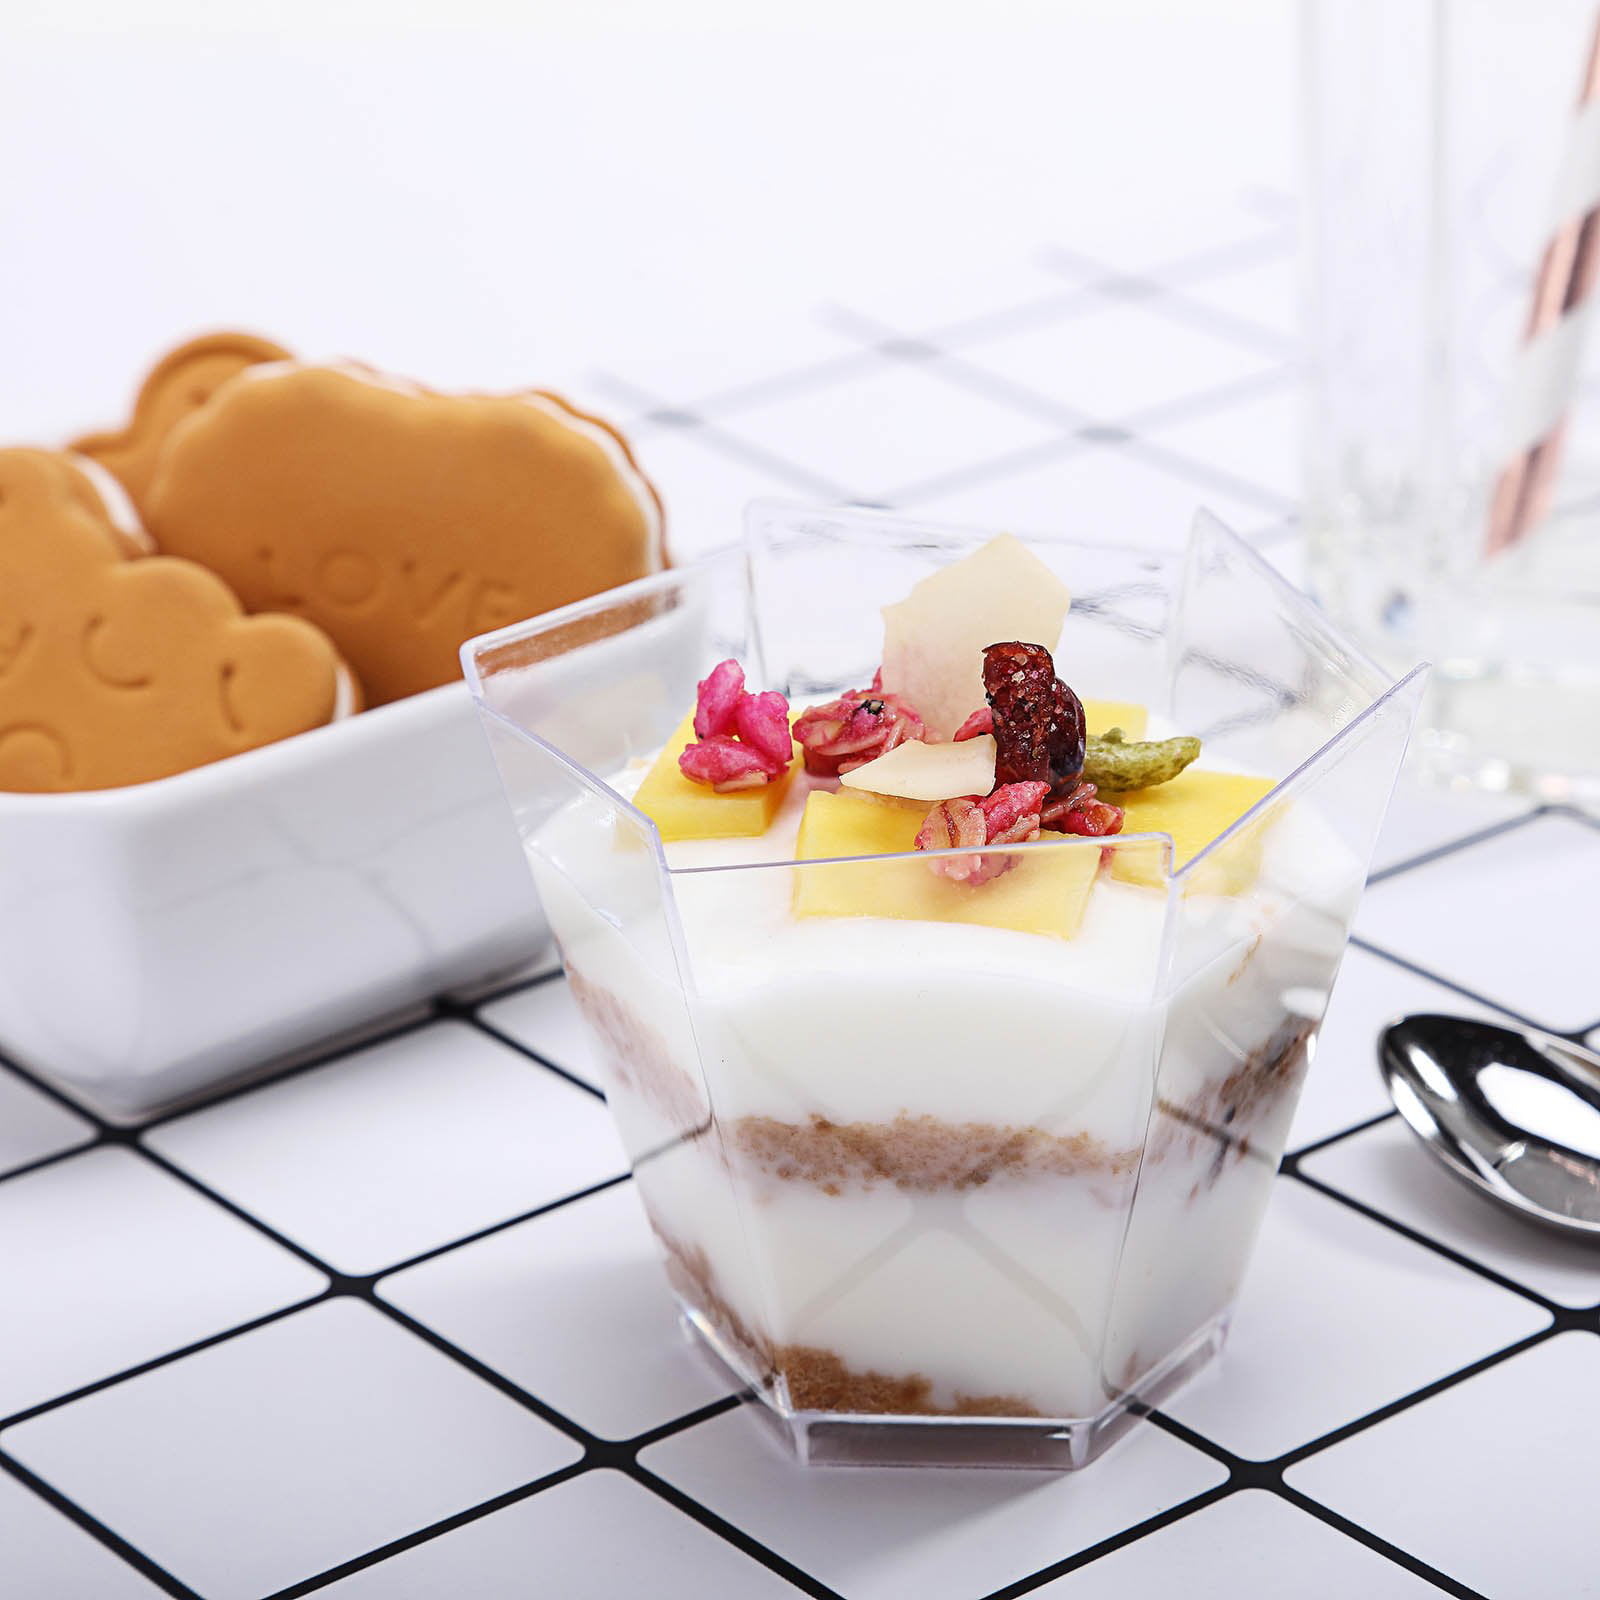 12 Small Plastic Diamond Dessert Cube mini party clear cup dish bowls